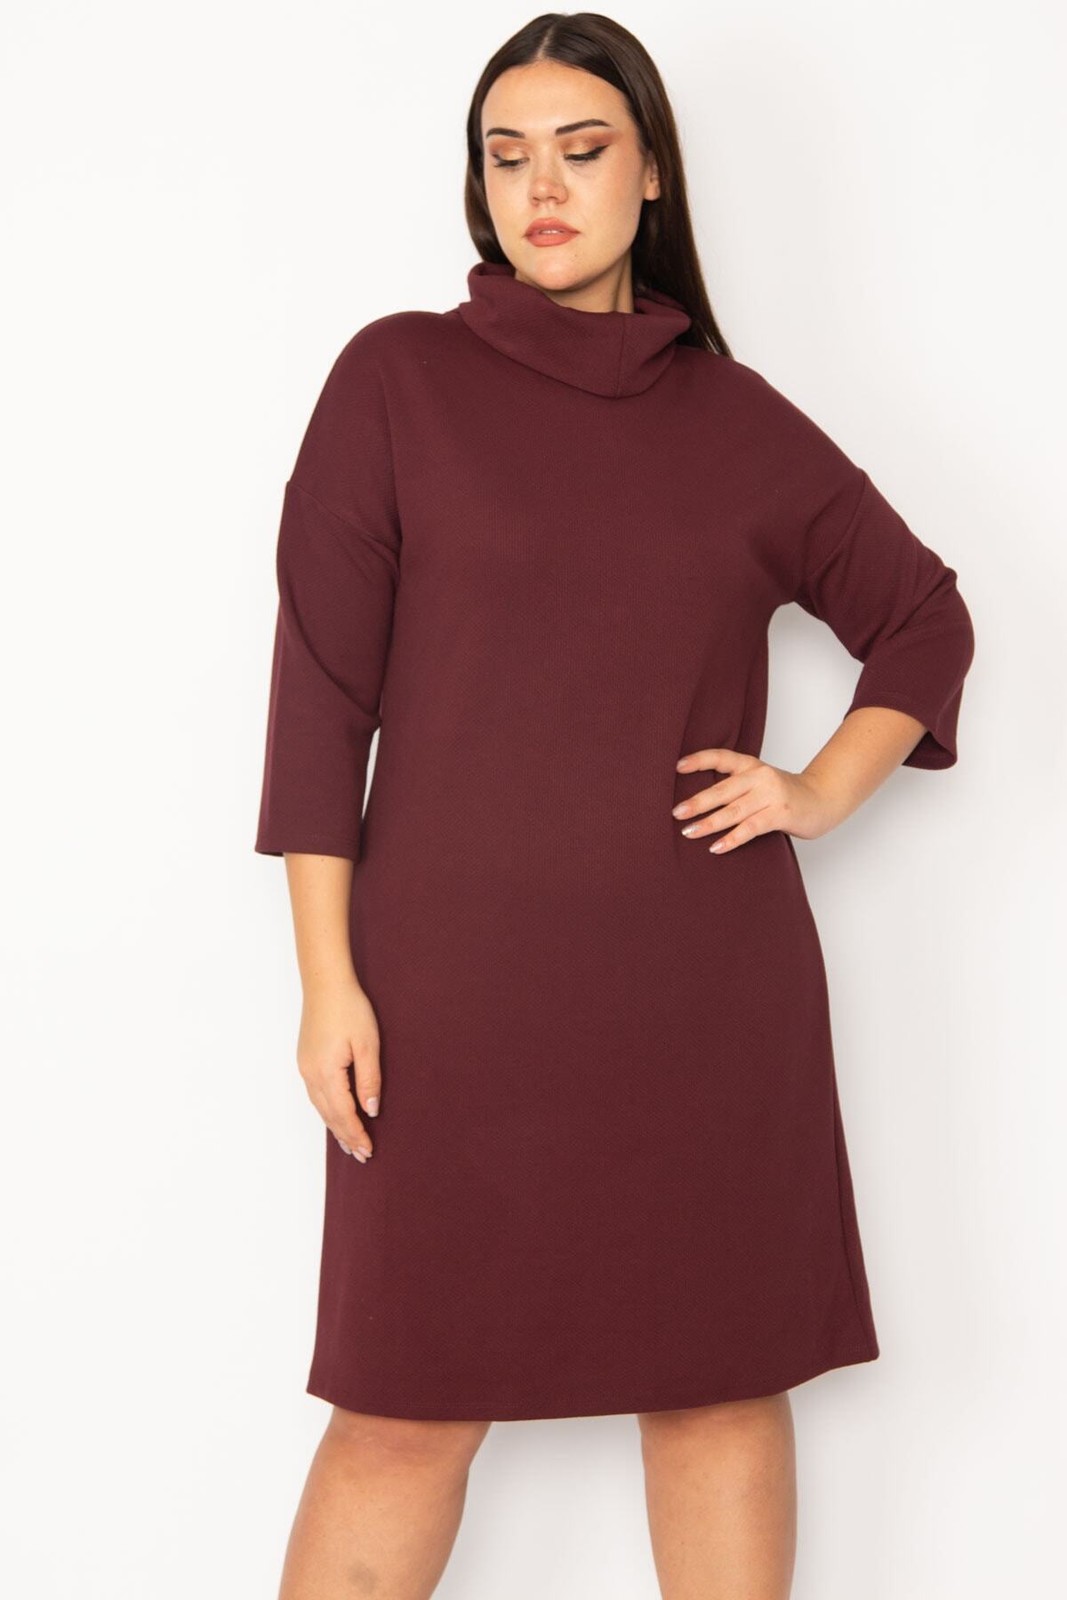 Şans Women's Plus Size Burgundy Depigmented Collar Capri Sleeve Dress